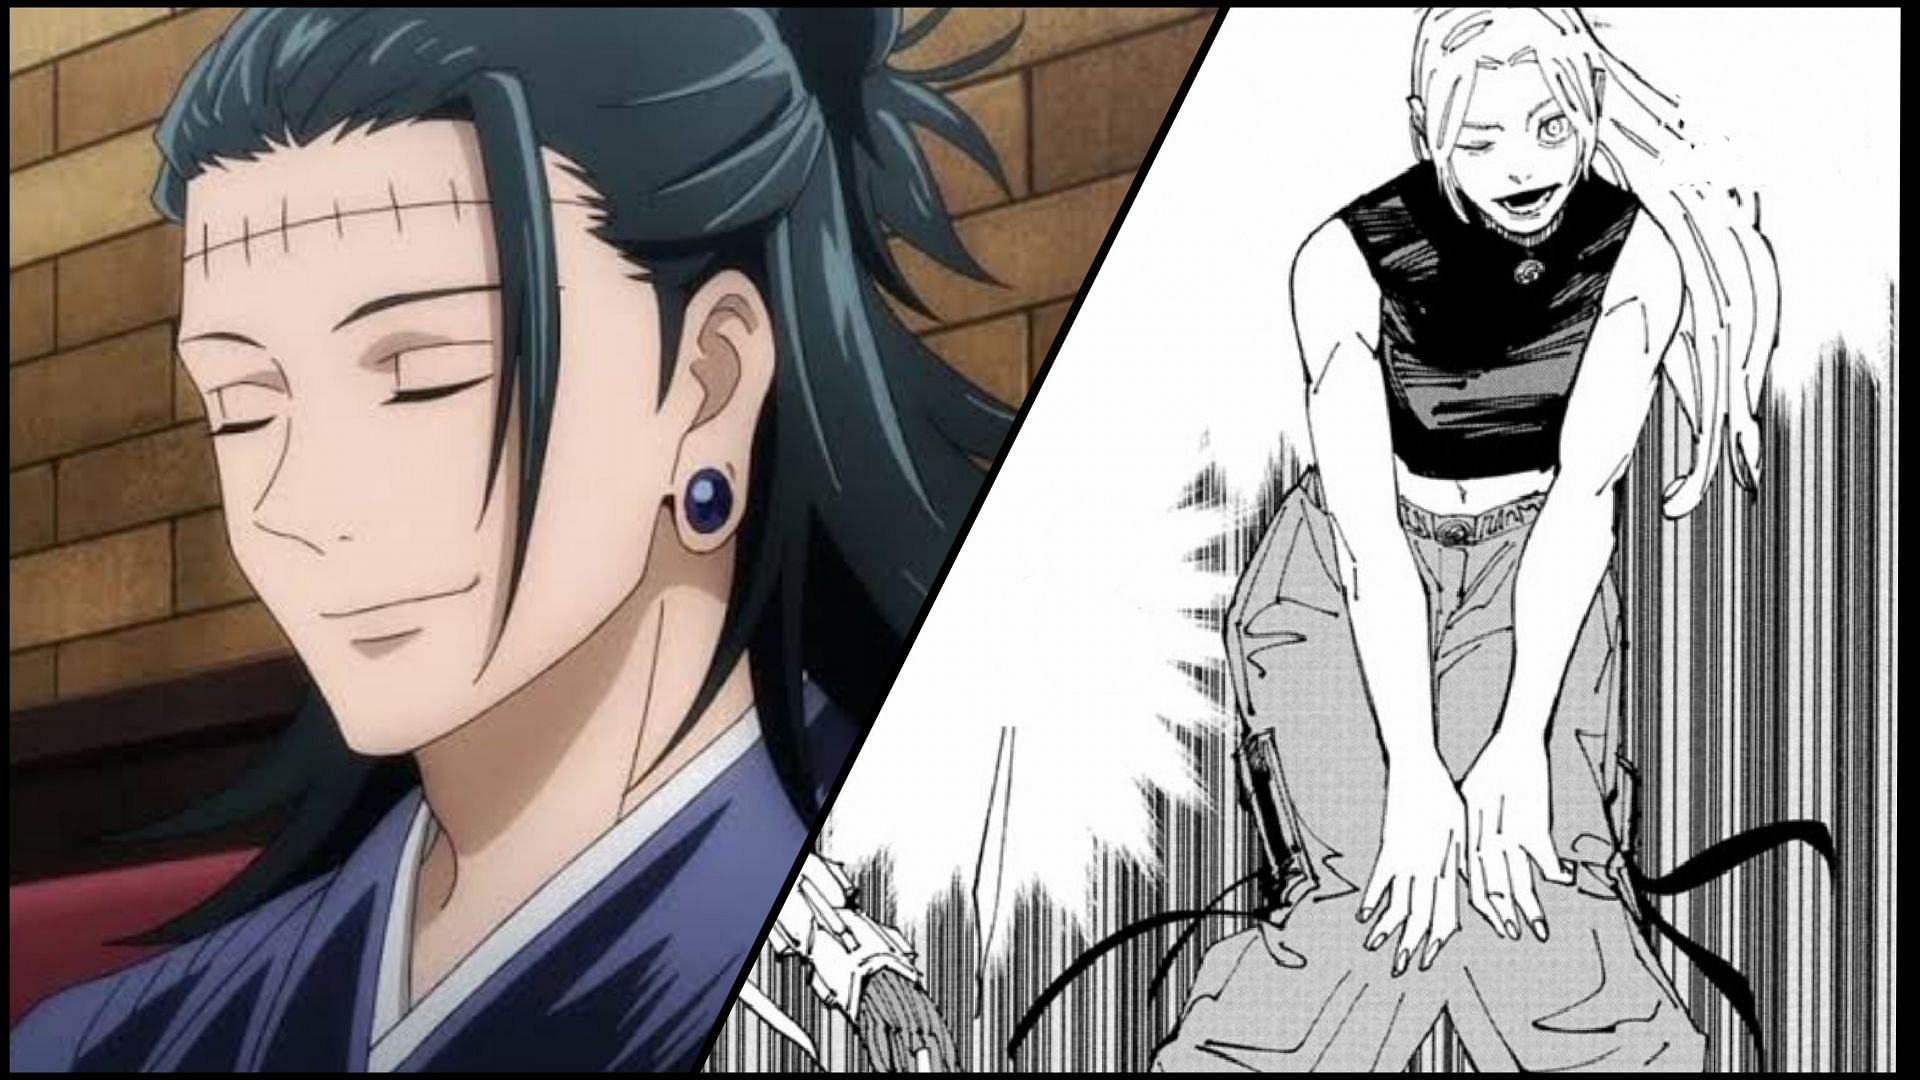 Jujutsu Kaisen chapter 205 spoilers: The battle between Yuki and Kenjaku  begins, Tengen has a plan